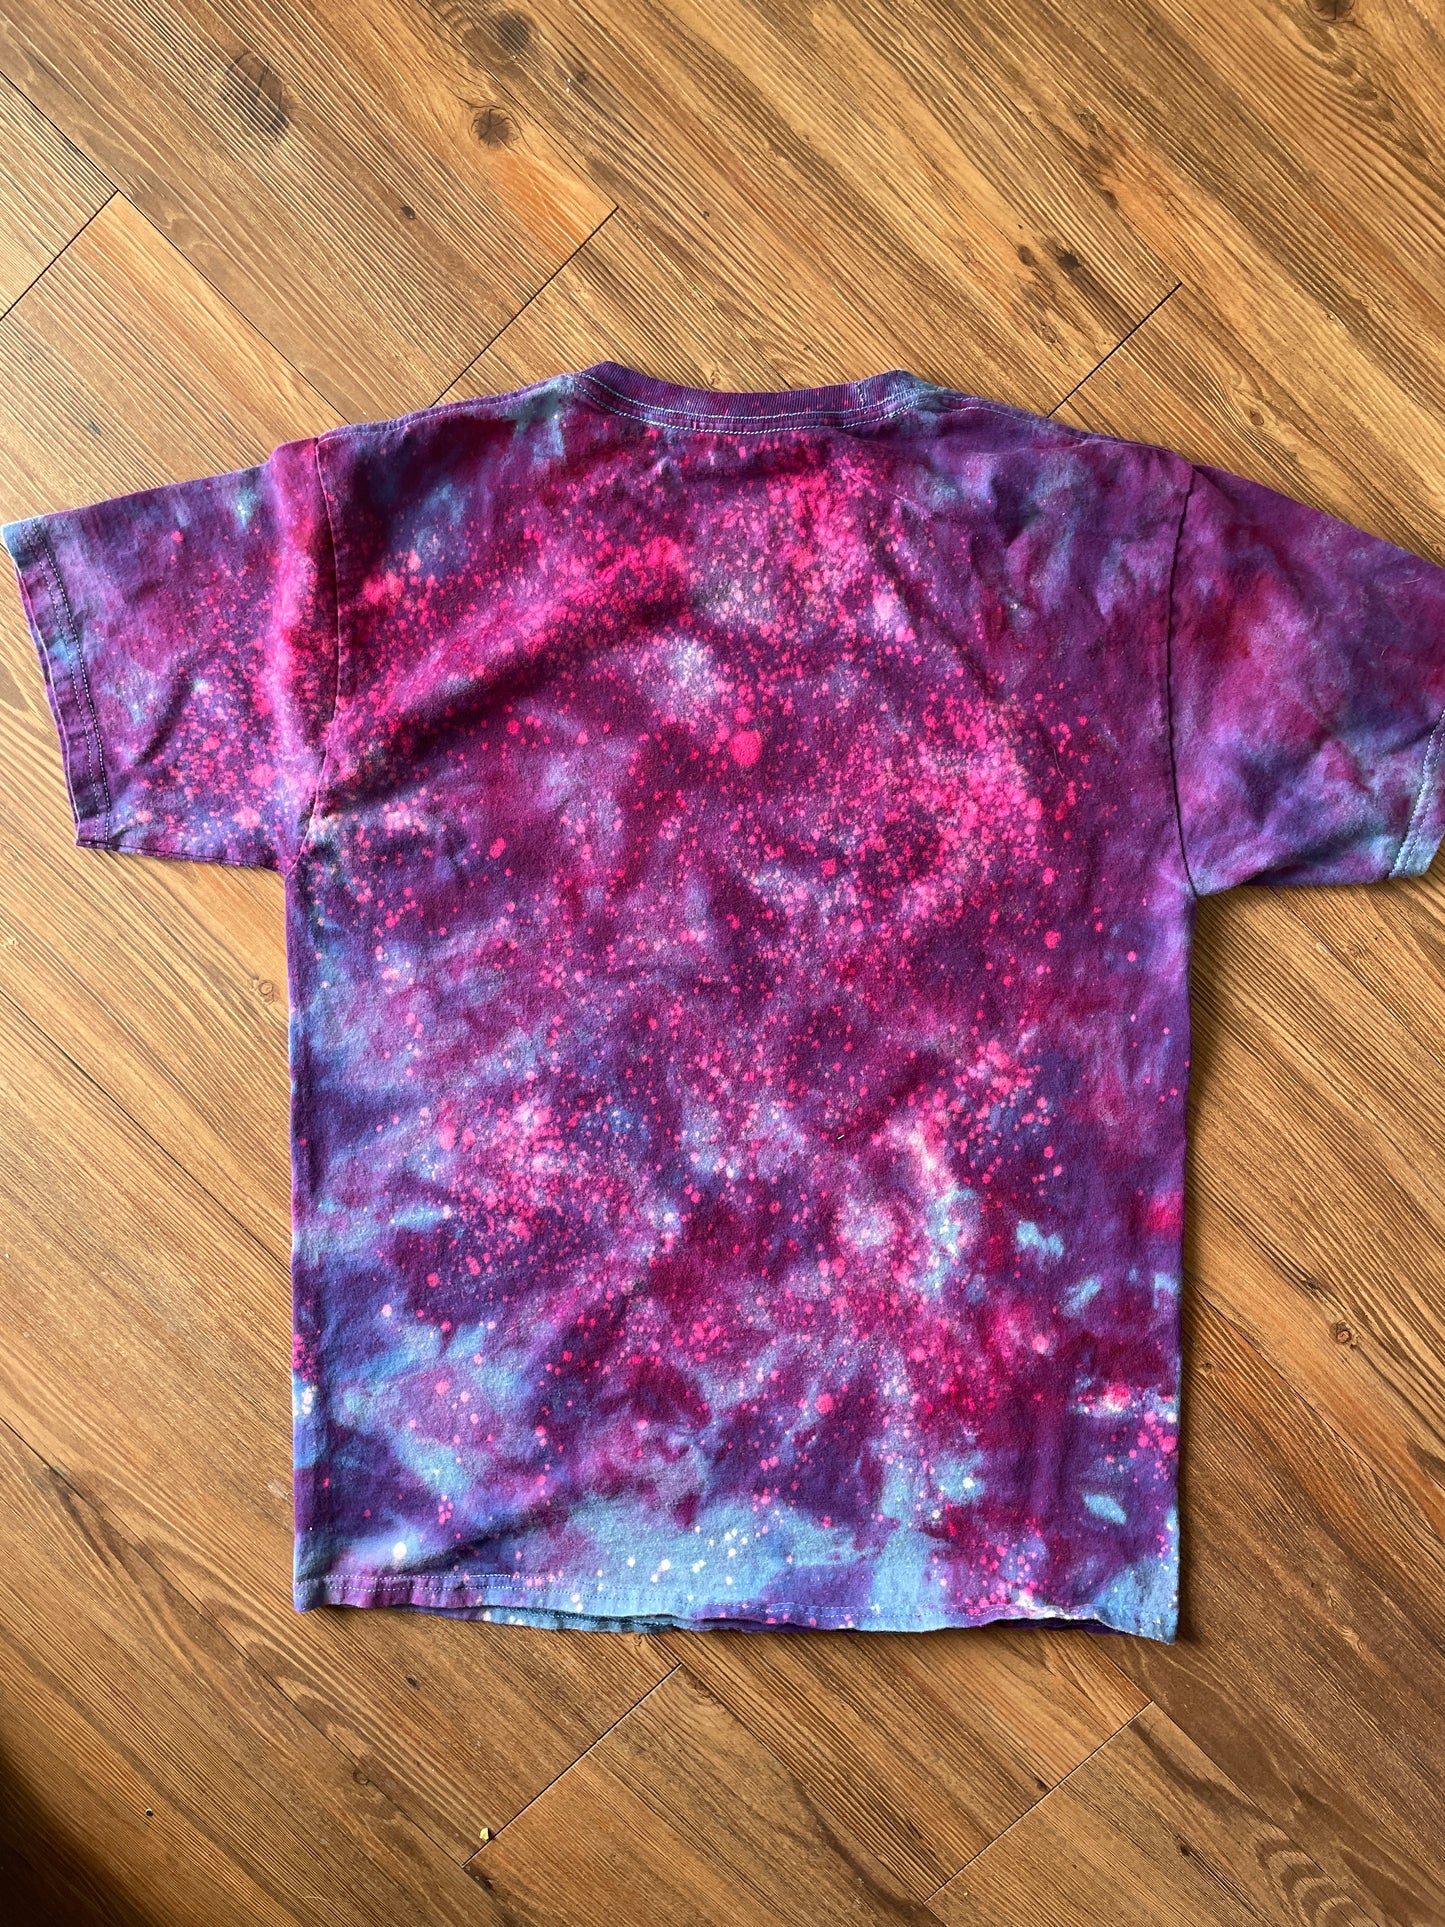 MEDIUM Men’s Colorado Bison Galaxy Tie Dye T-Shirt | Purple Ice Dye Short Sleeve Tee